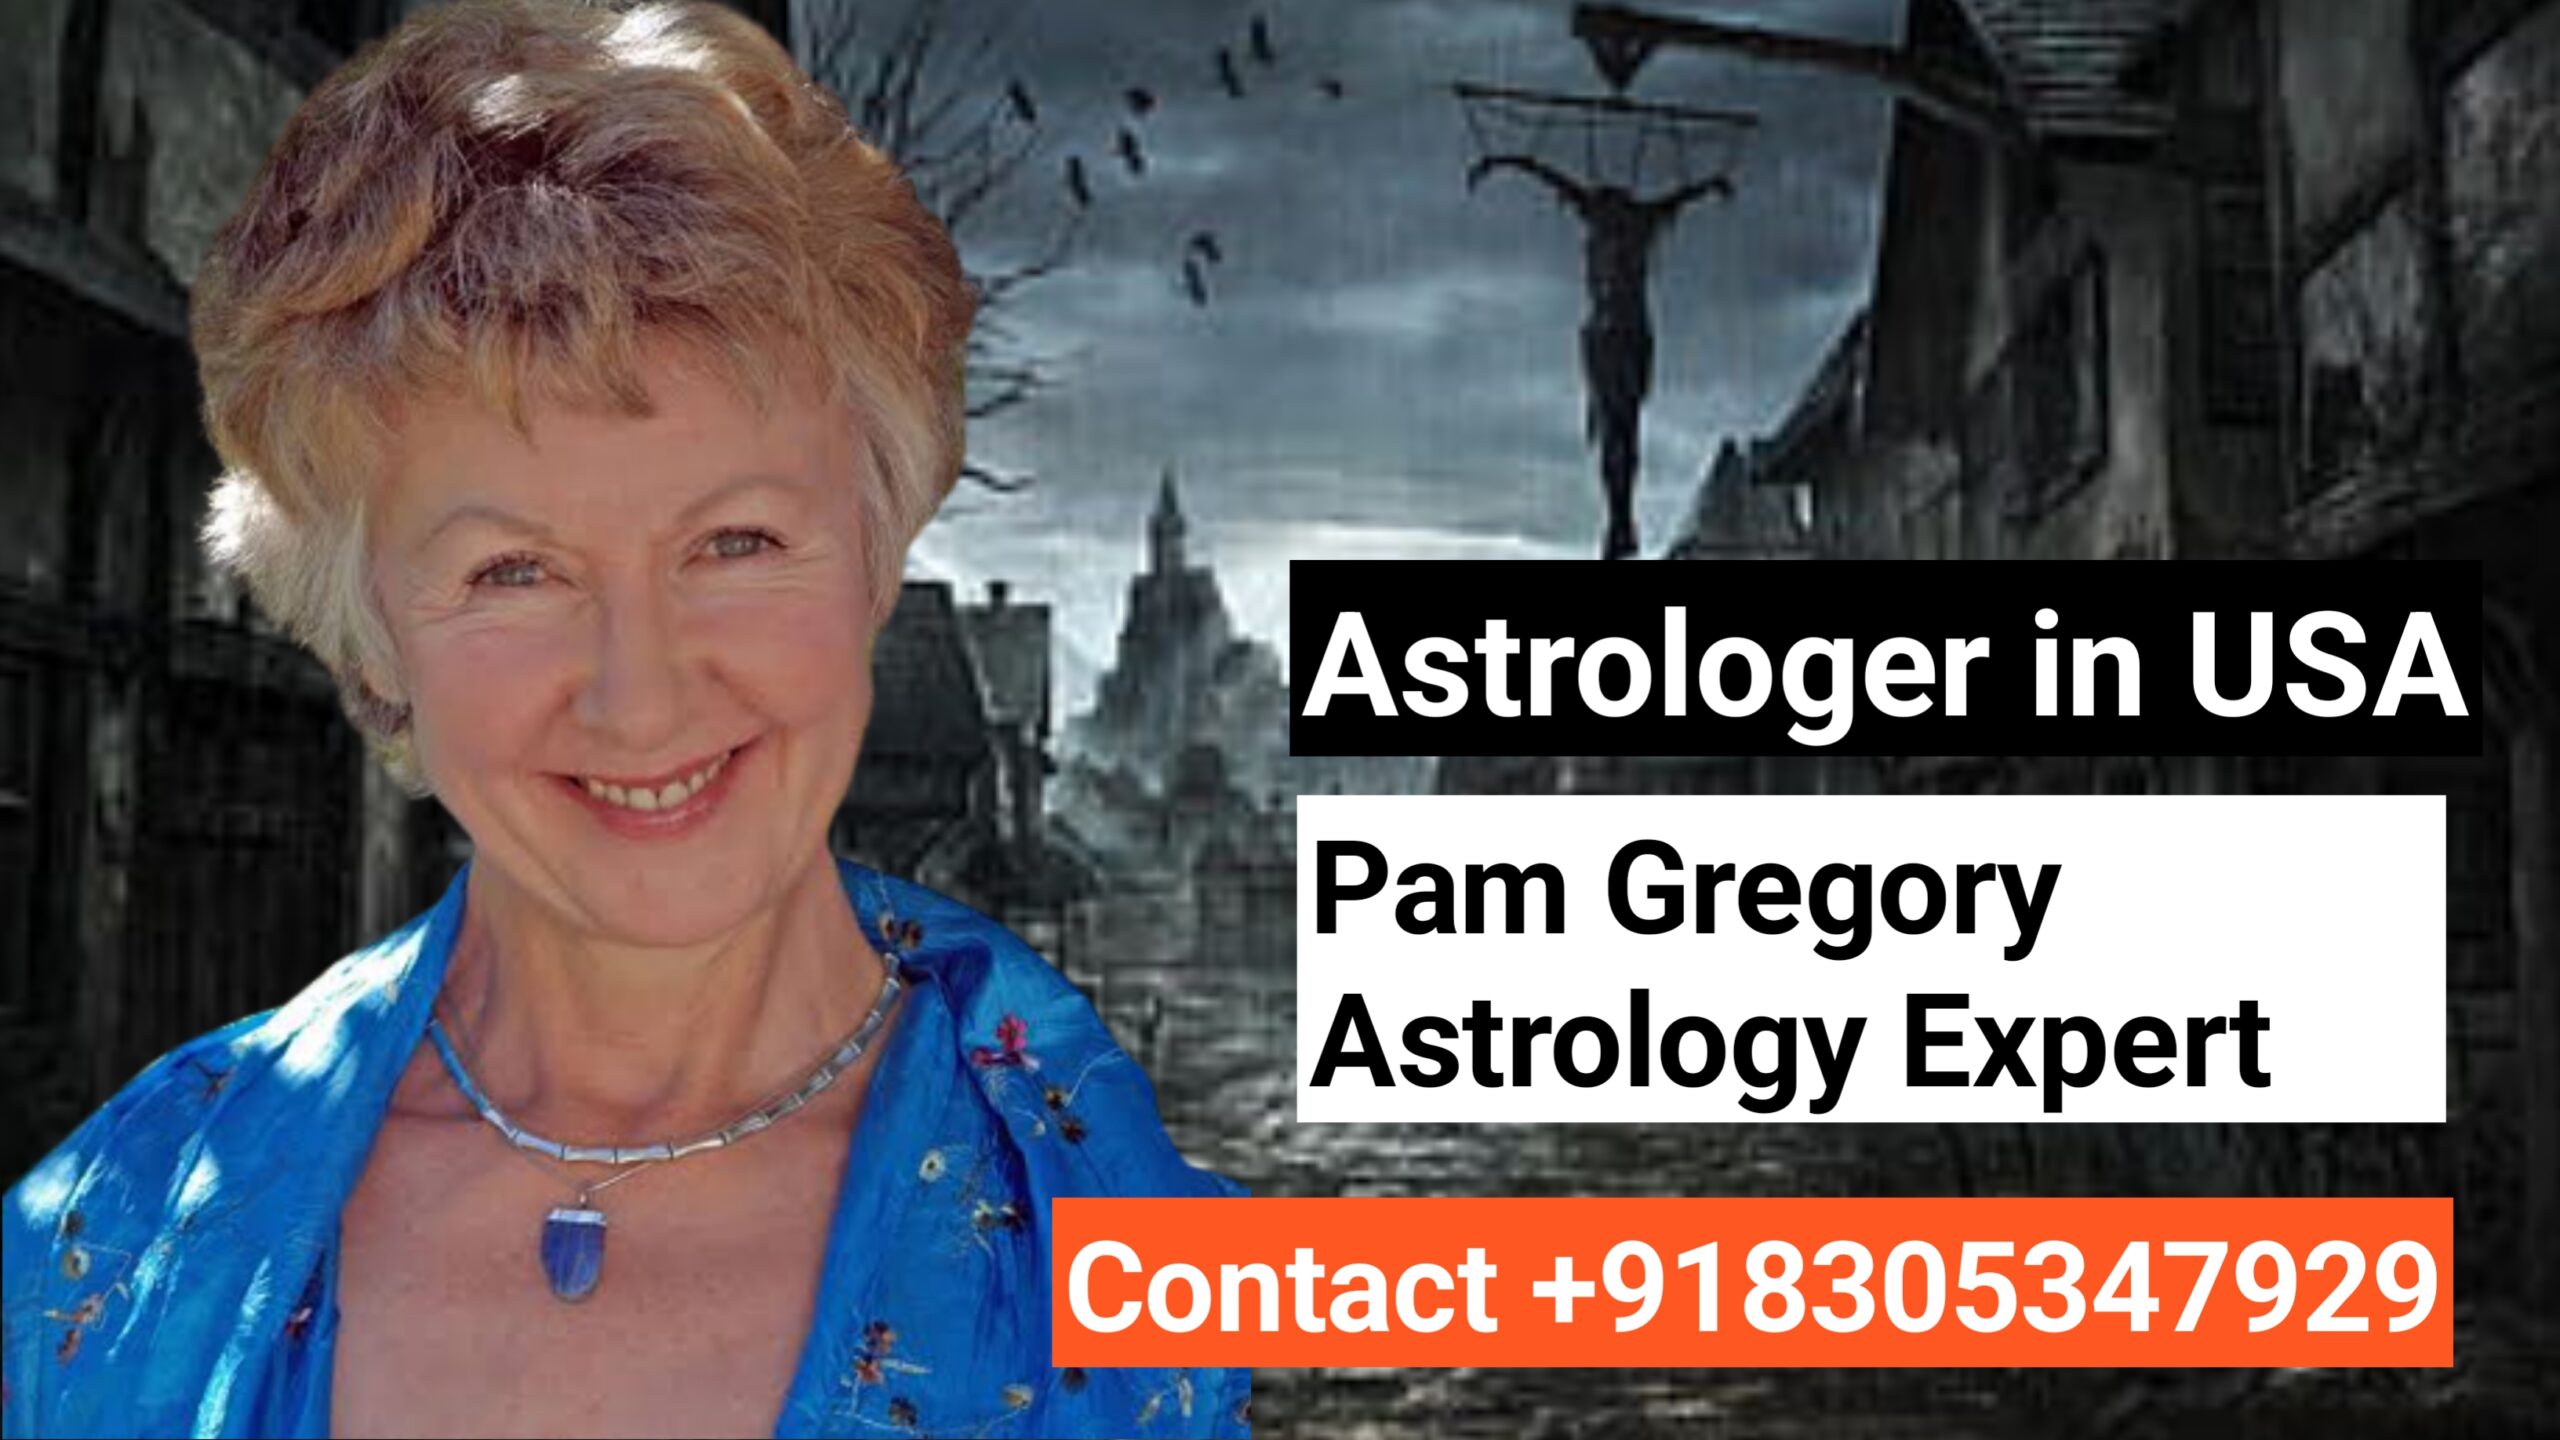 Pam Gregory Astrology Expert